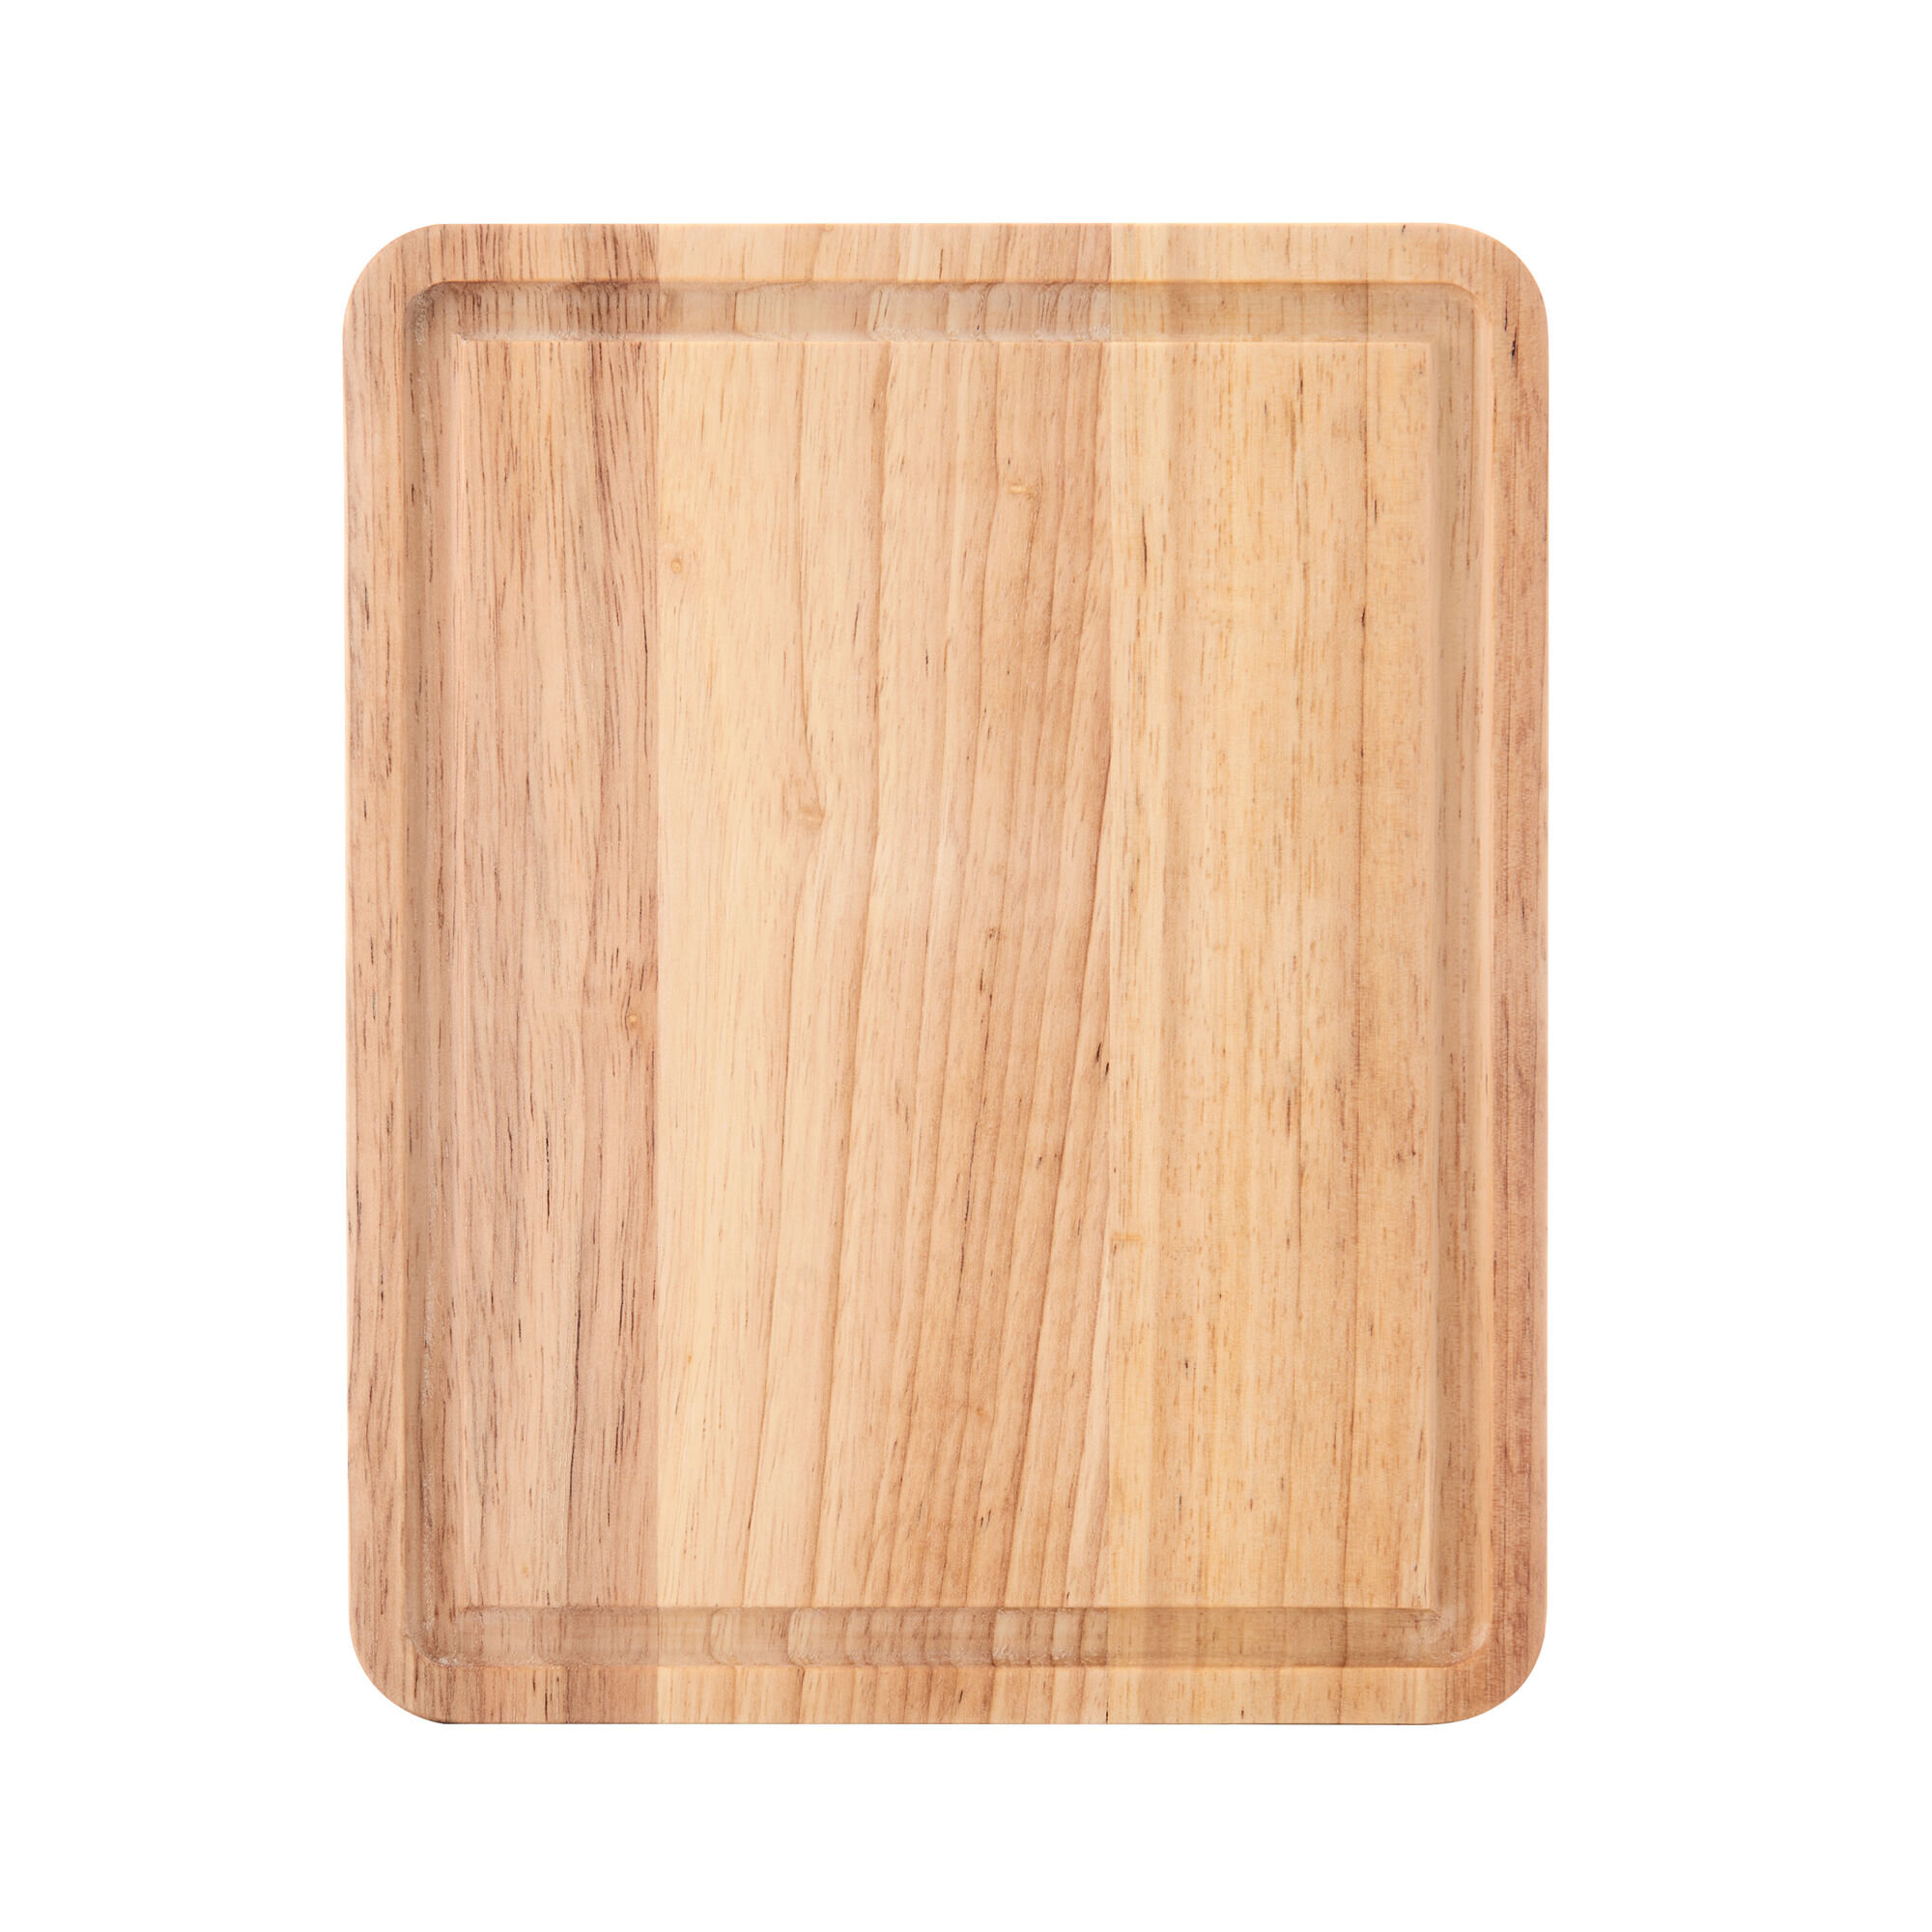 KitchenAid, Kitchen, Kitchenaid Bamboo Nonslip Cutting Board Small